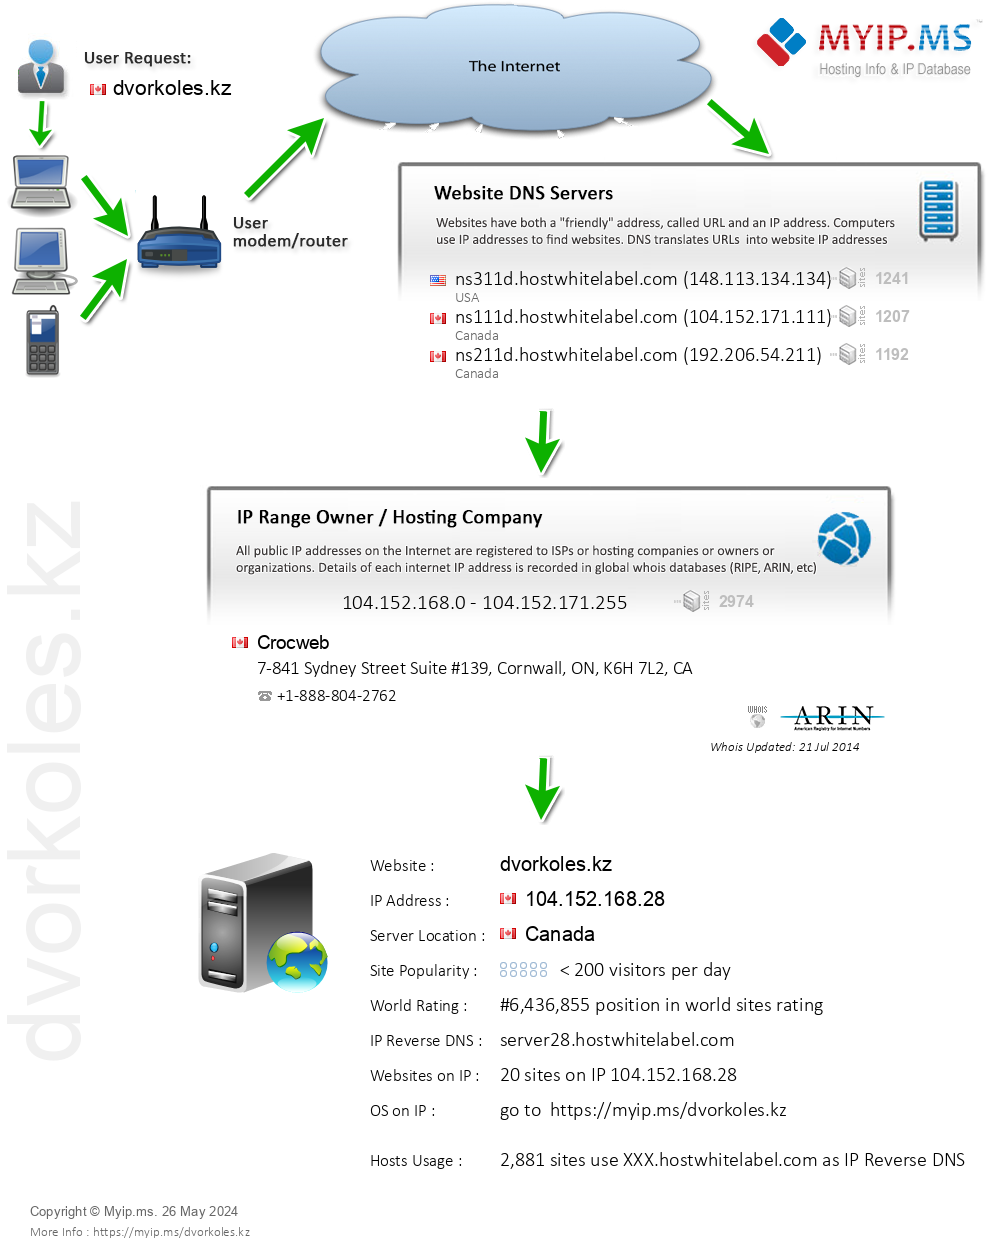 Dvorkoles.kz - Website Hosting Visual IP Diagram